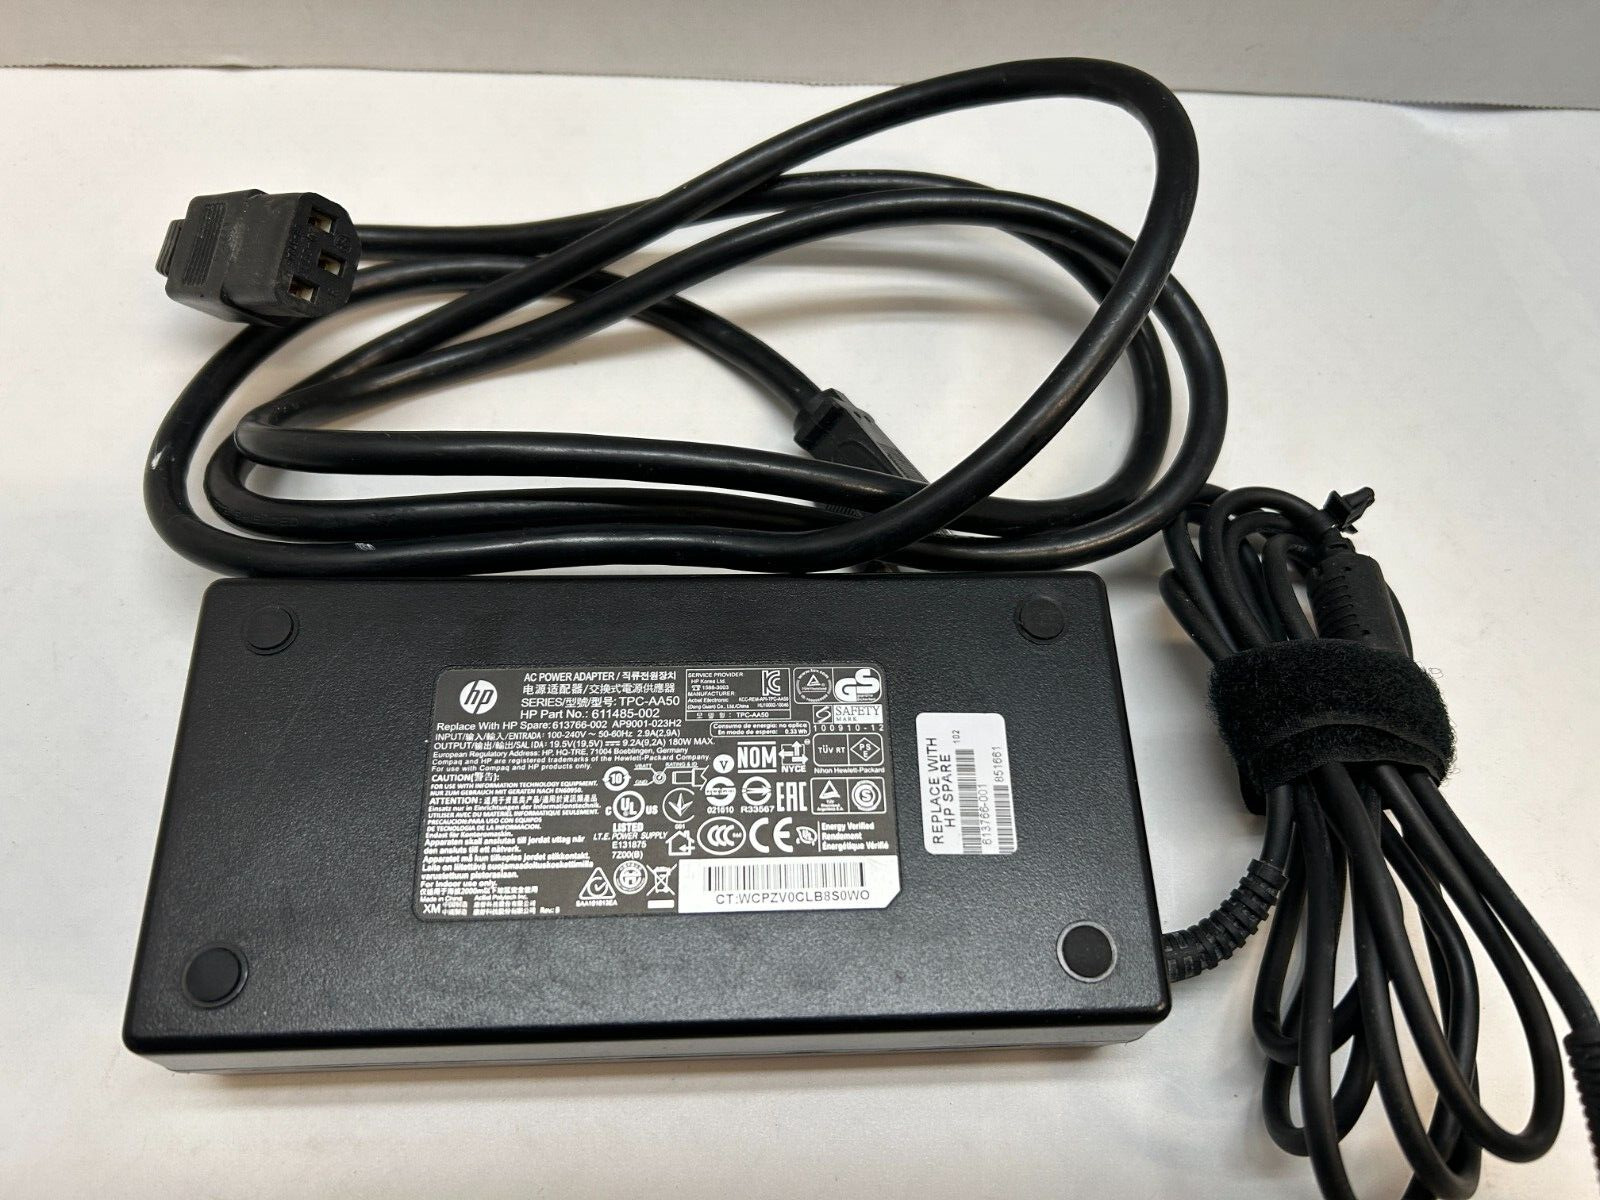 Origin HP 180W 19.5V AC Adapter for HP laptops and desktops smart pin, mixed